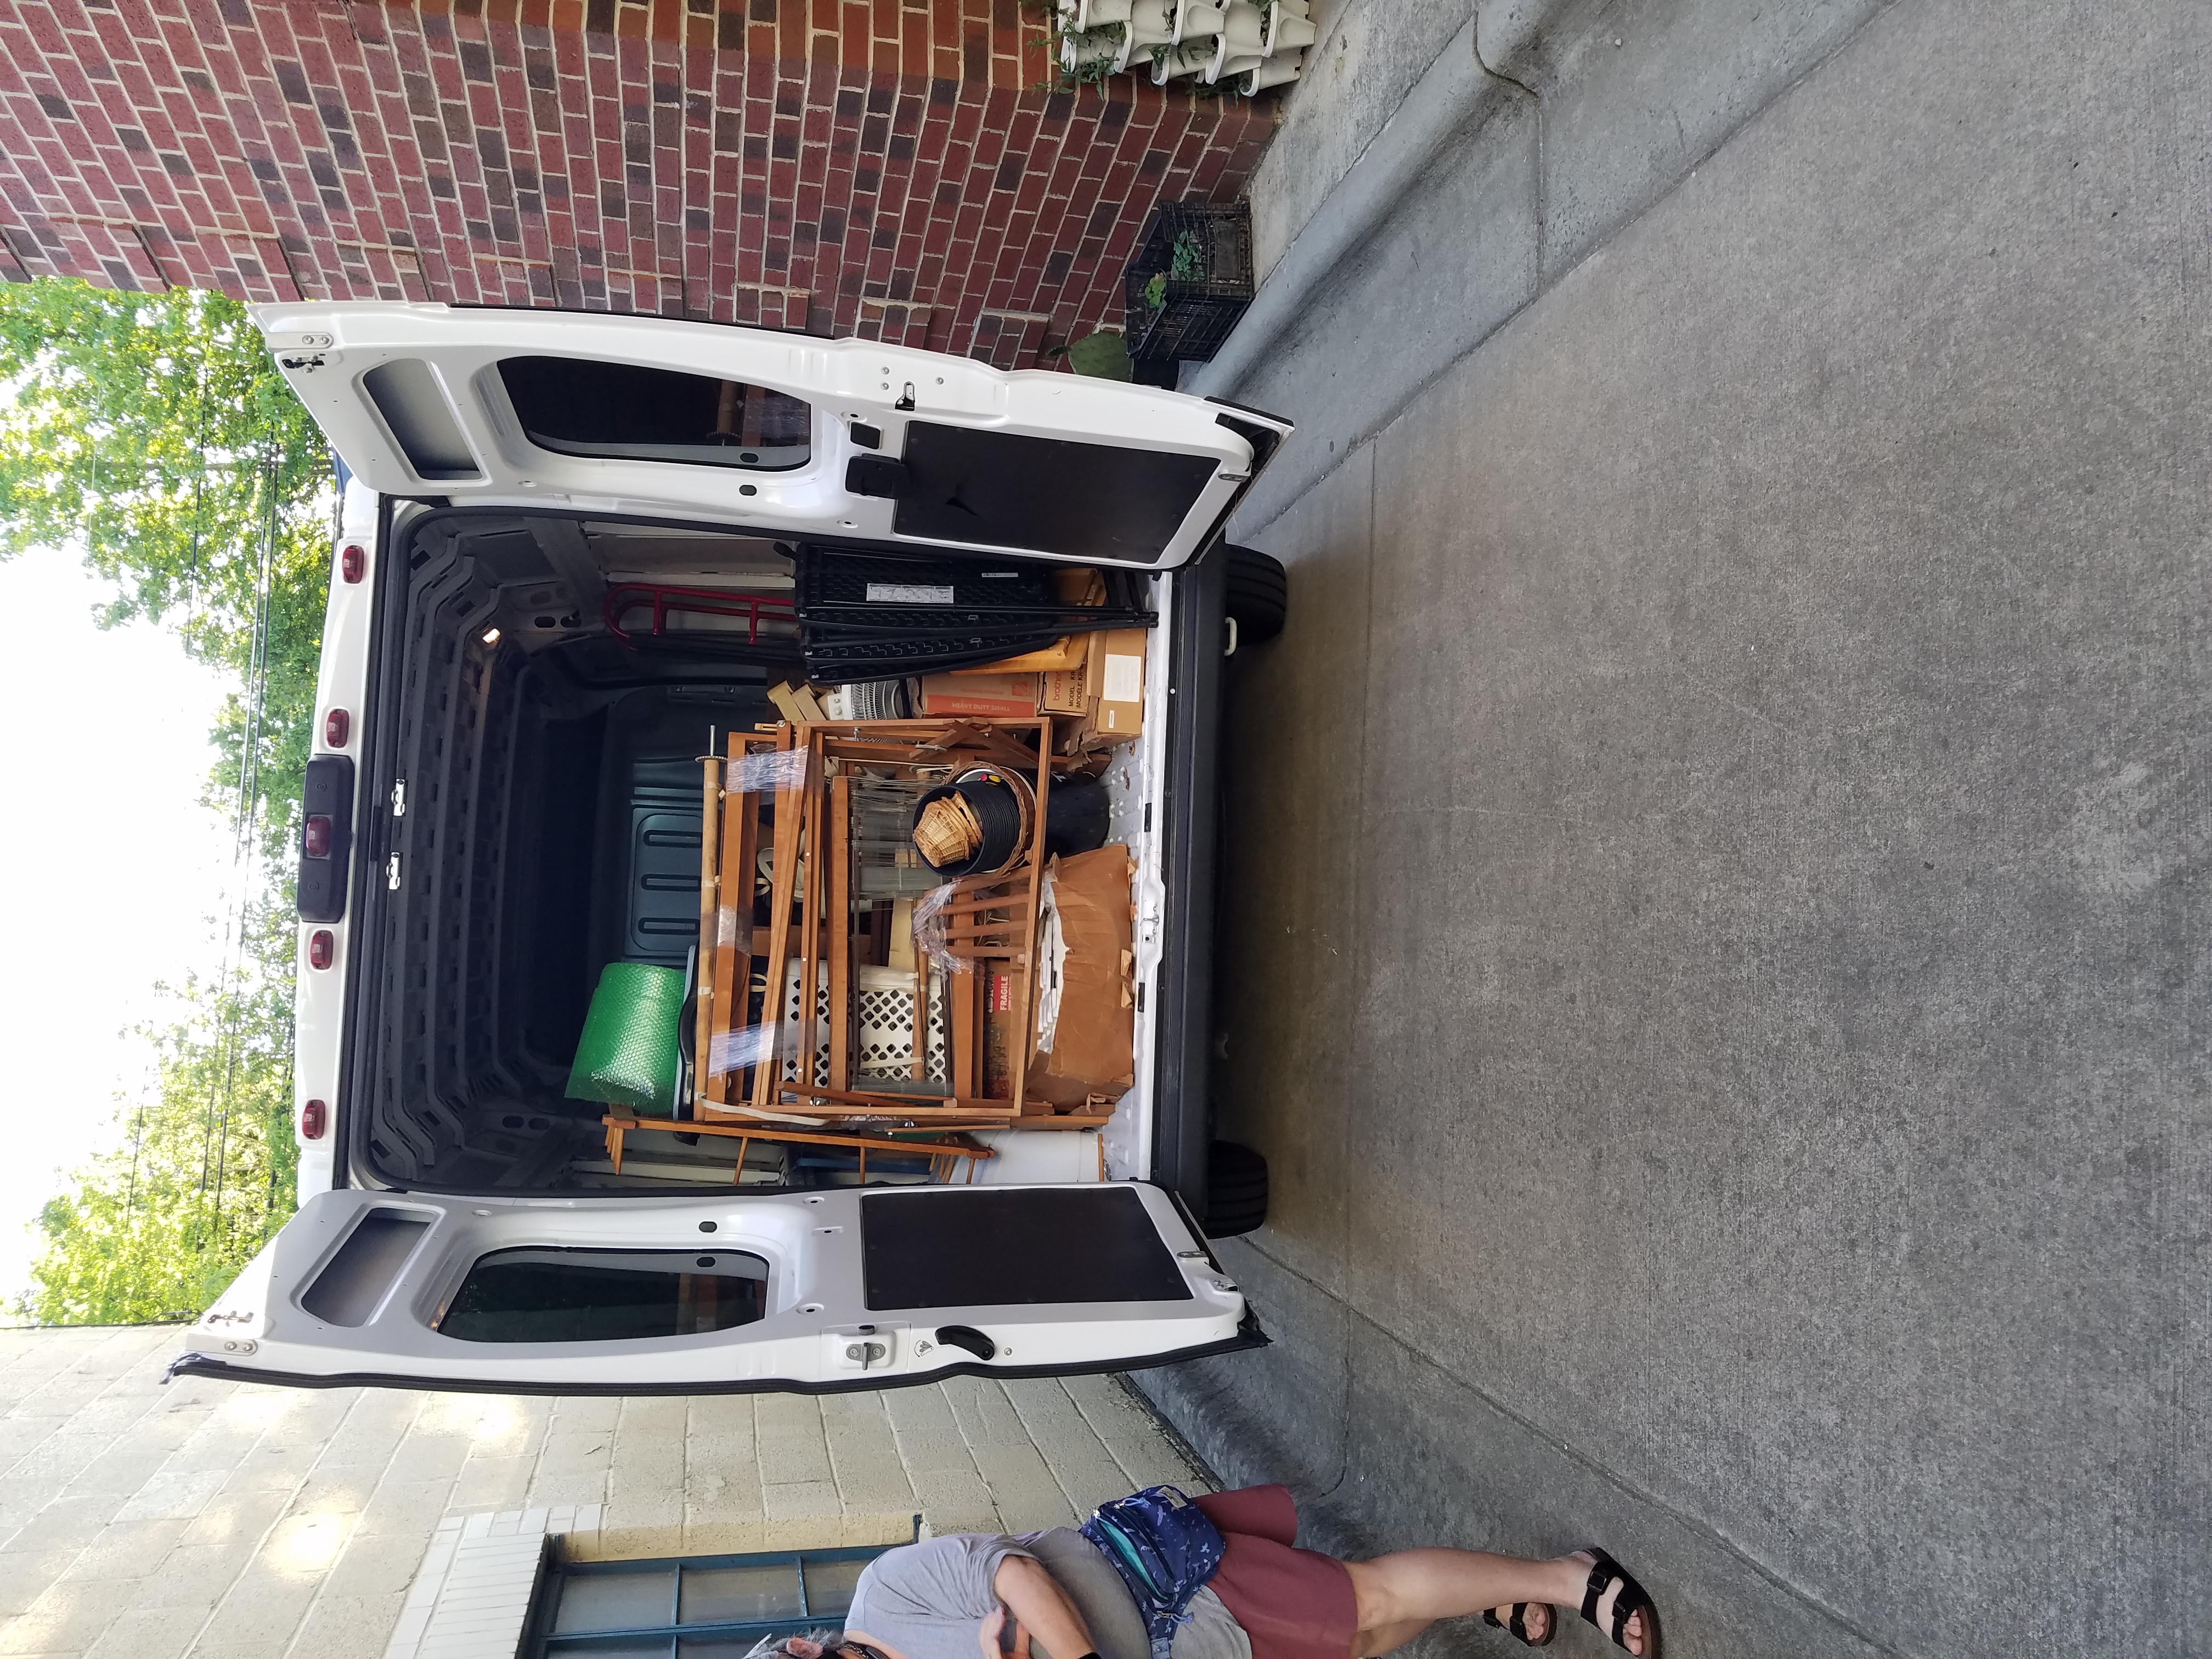 The van in Emsenn's alley prior to unloading